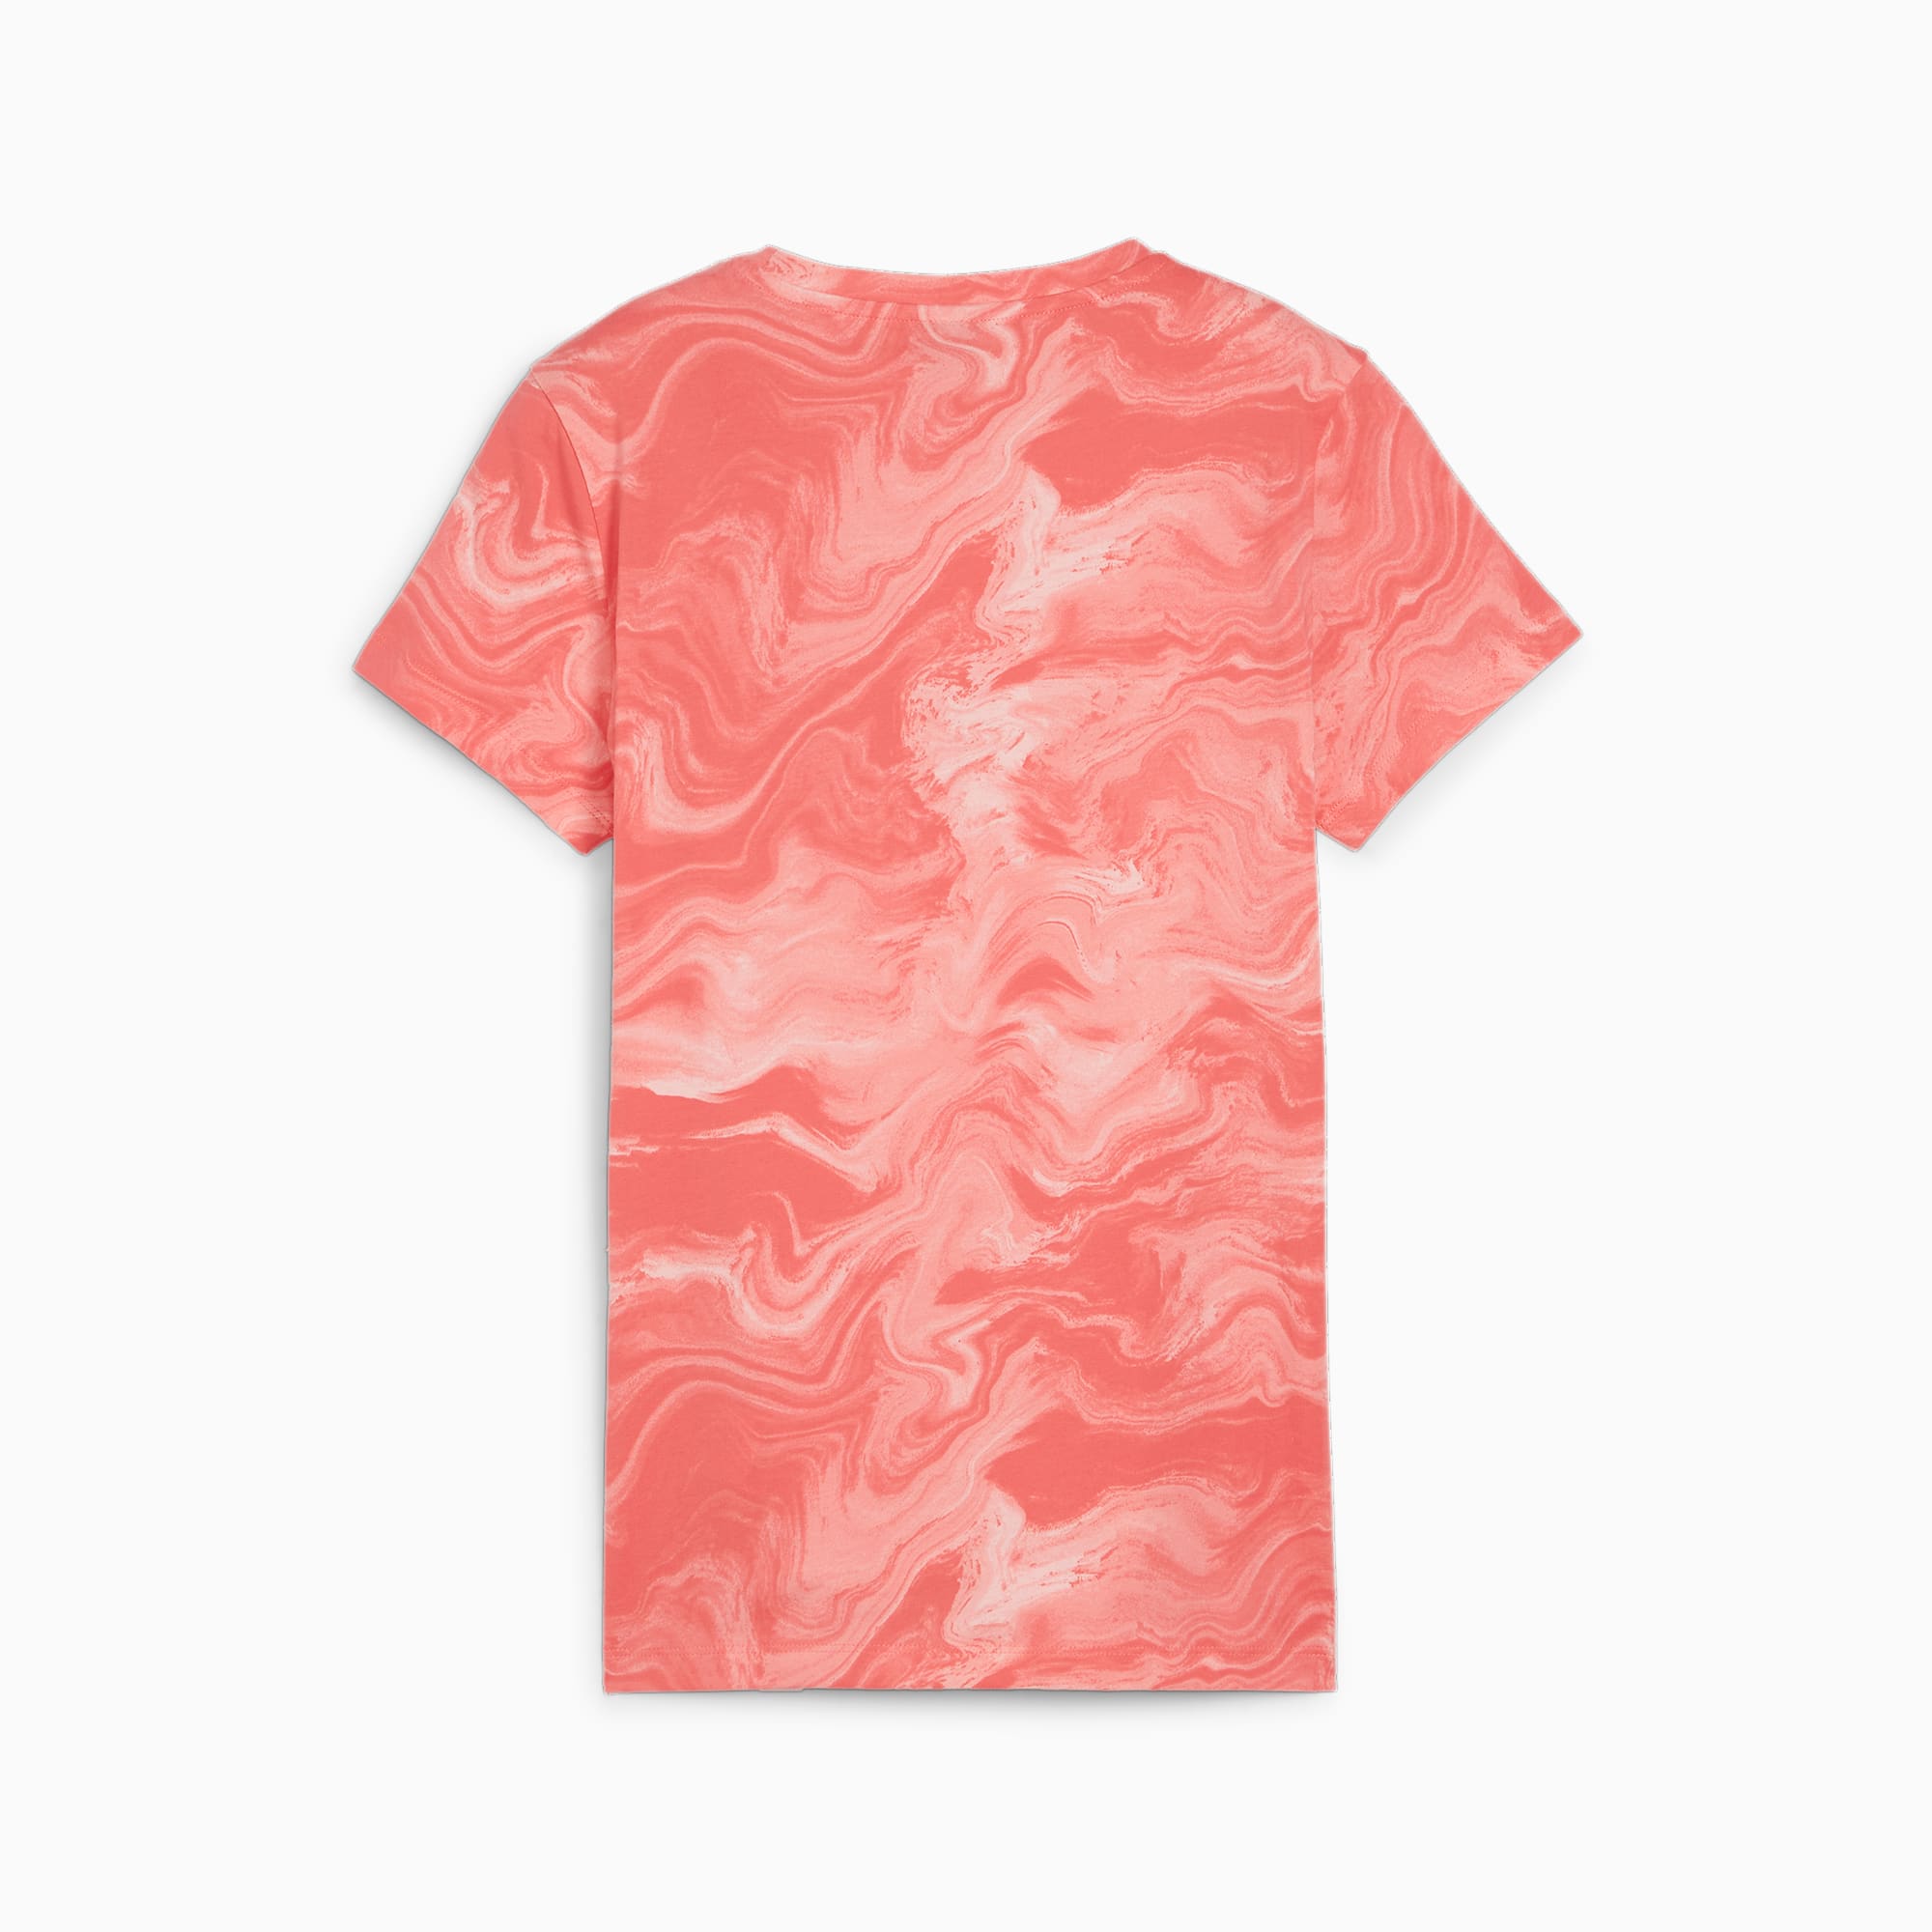 PUMA Ess+ Marbleized Women's T-Shirt, Peach Smoothie, Size S, Clothing